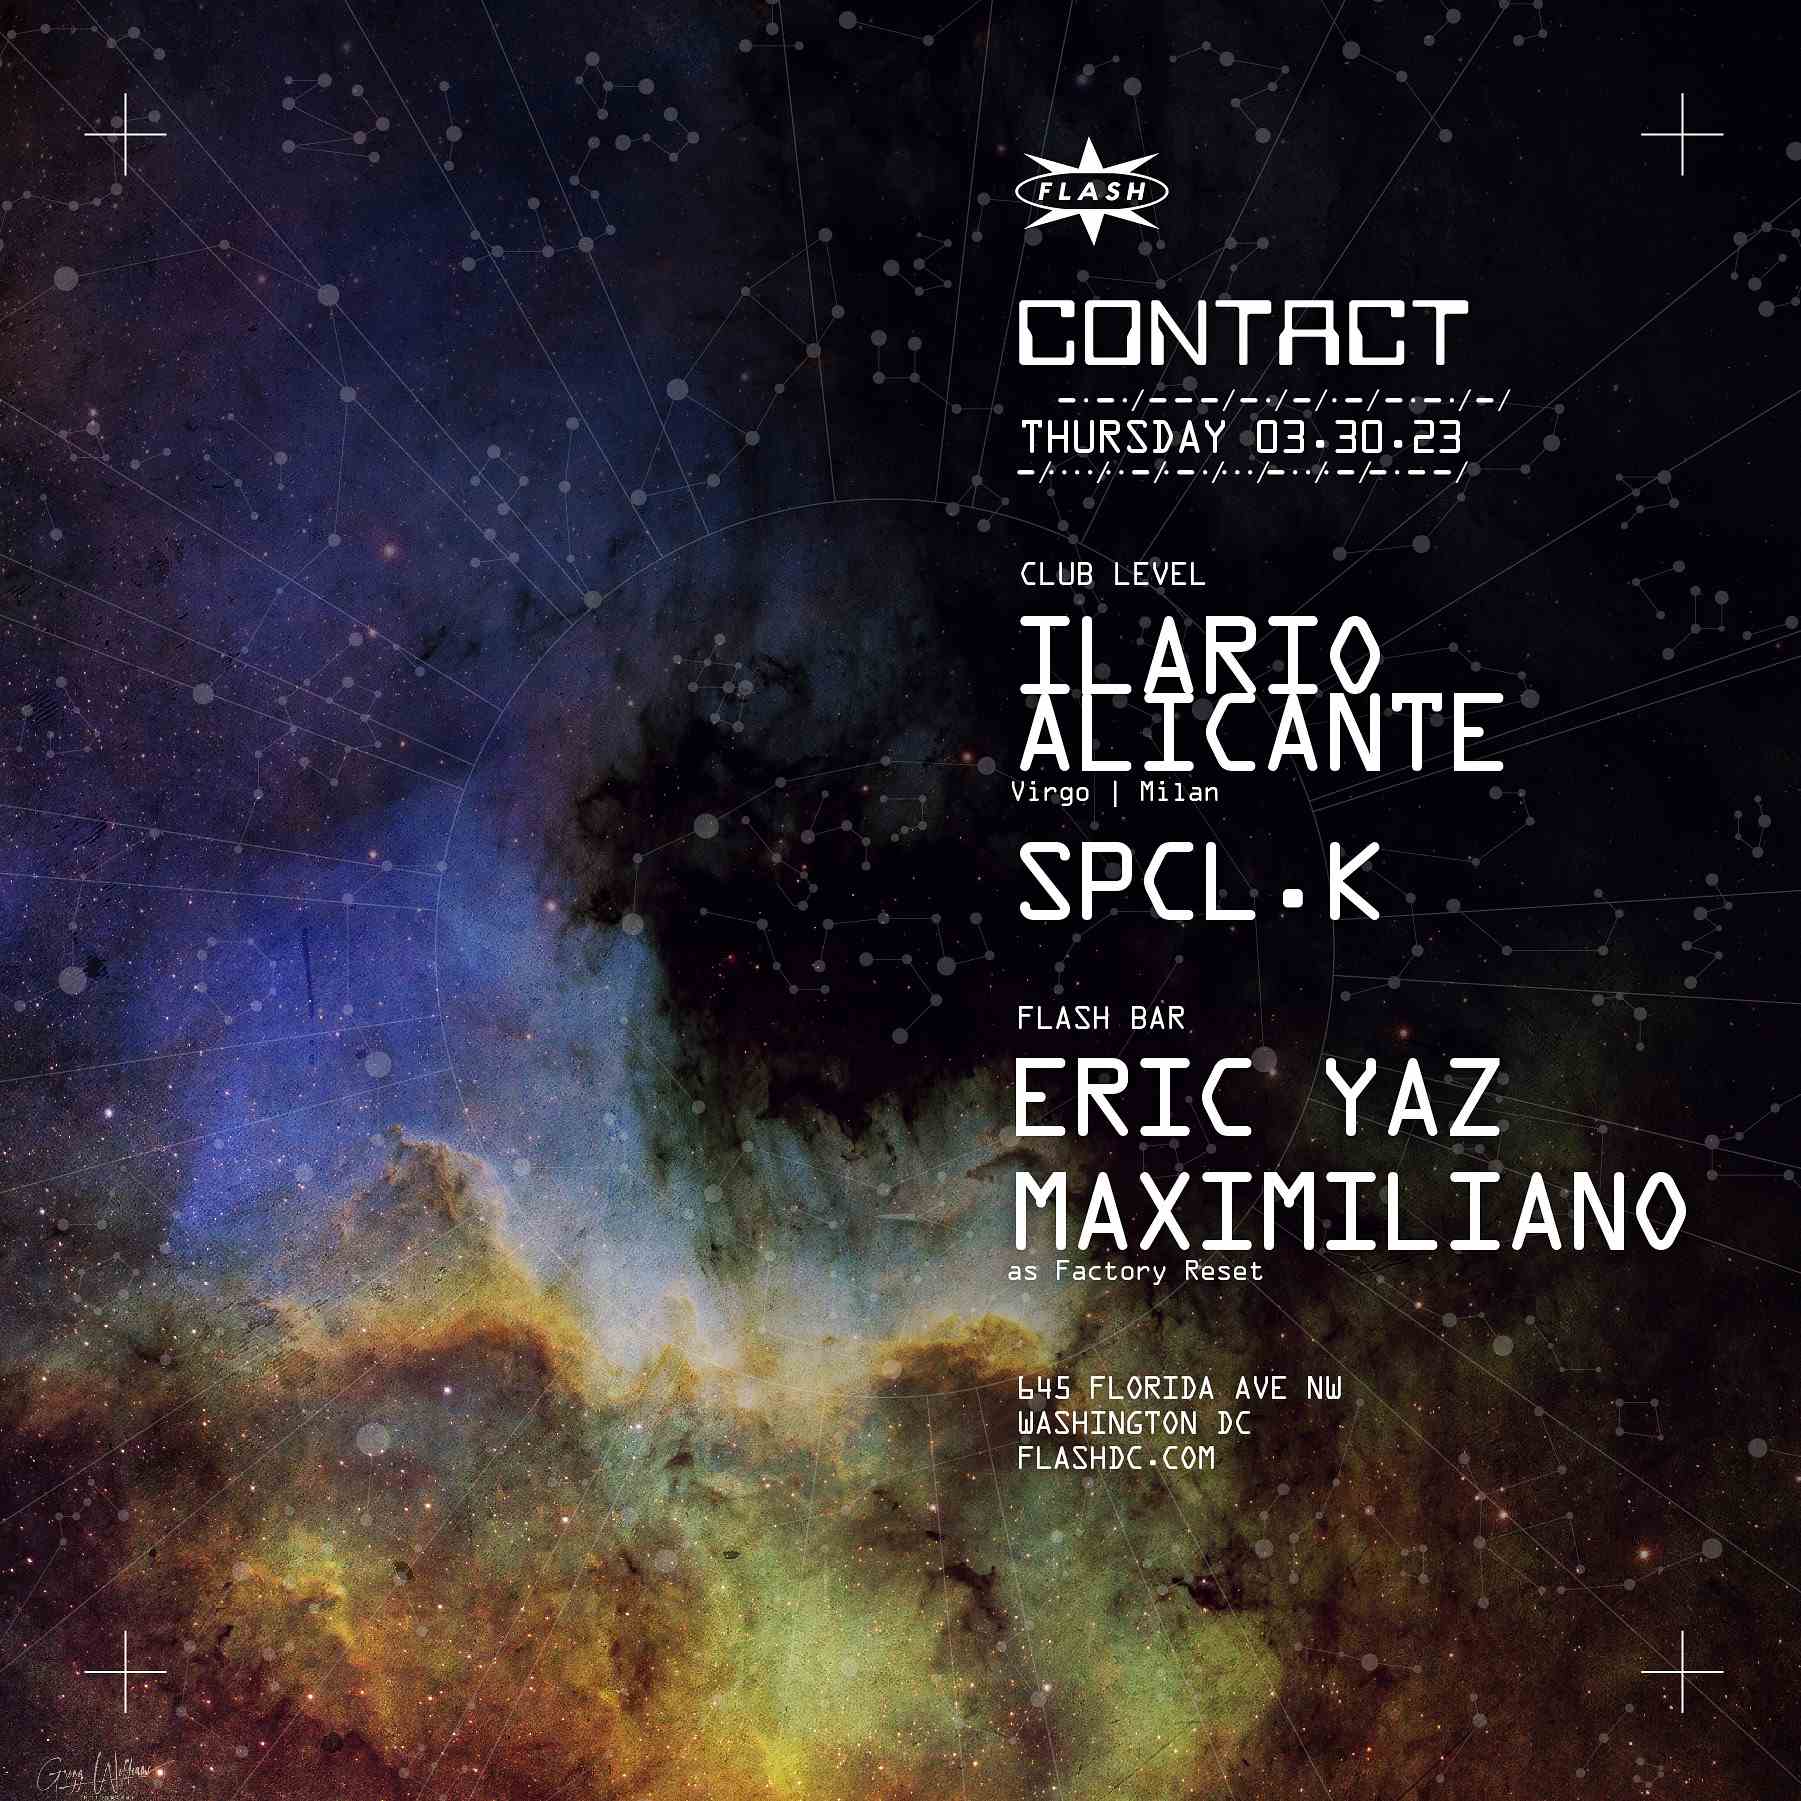 CONTACT: Ilario Alicante event flyer